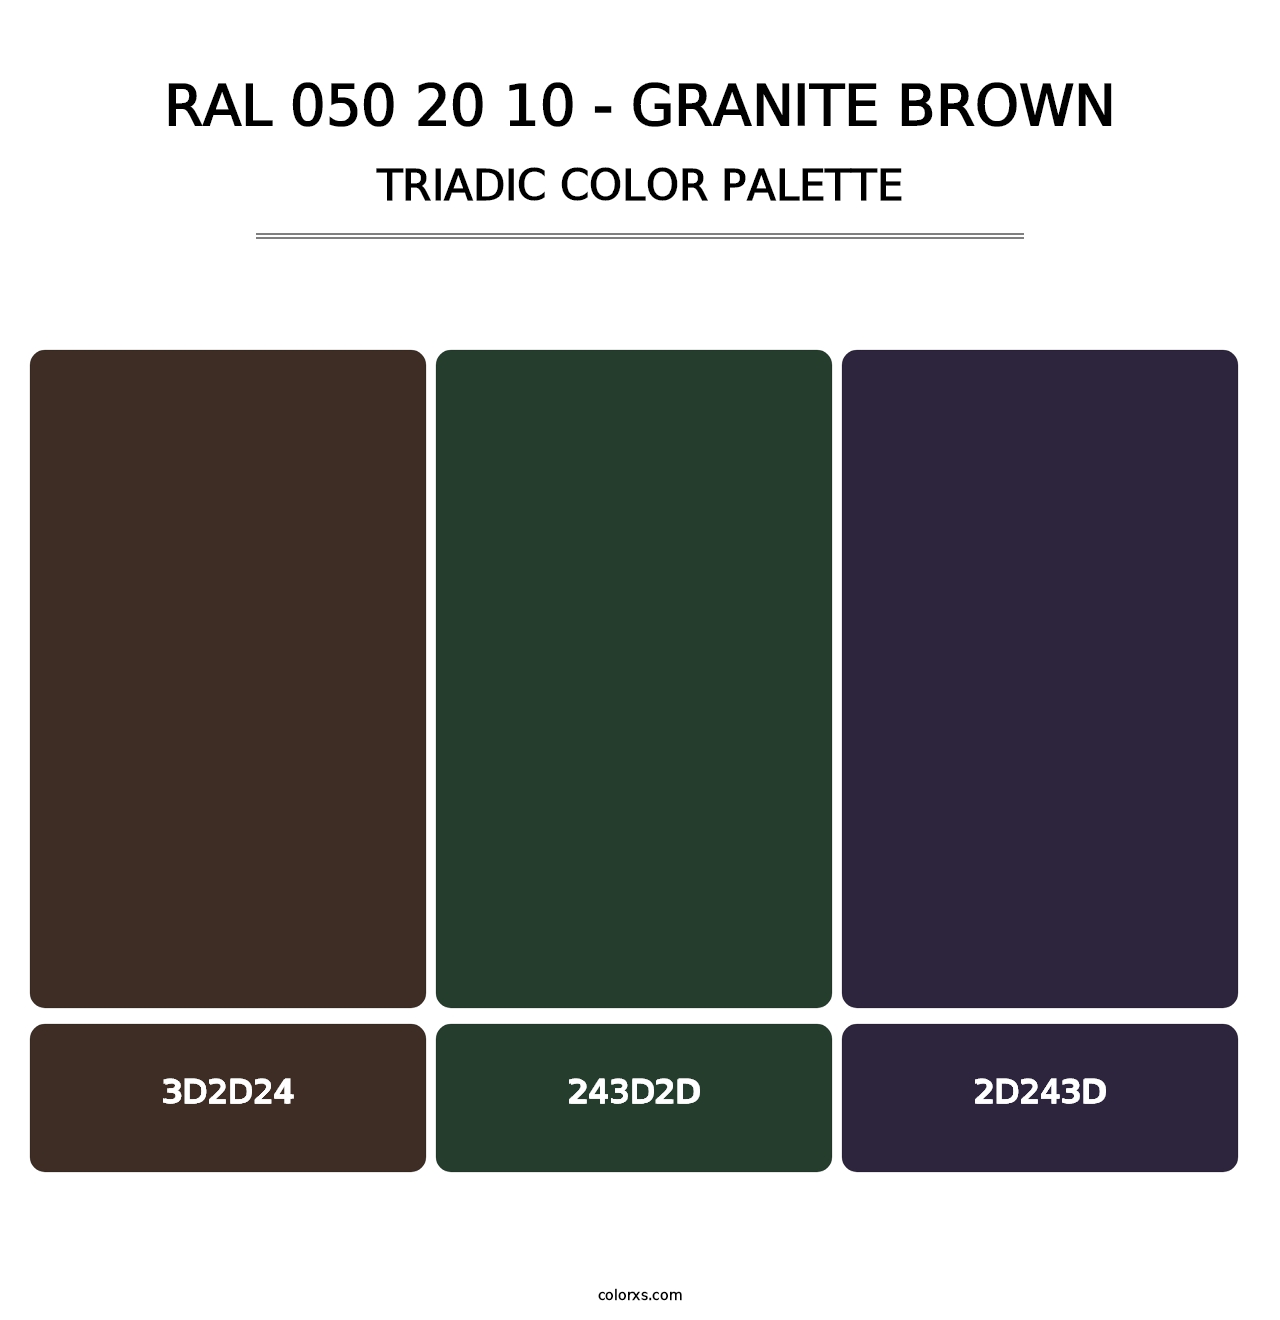 RAL 050 20 10 - Granite Brown - Triadic Color Palette